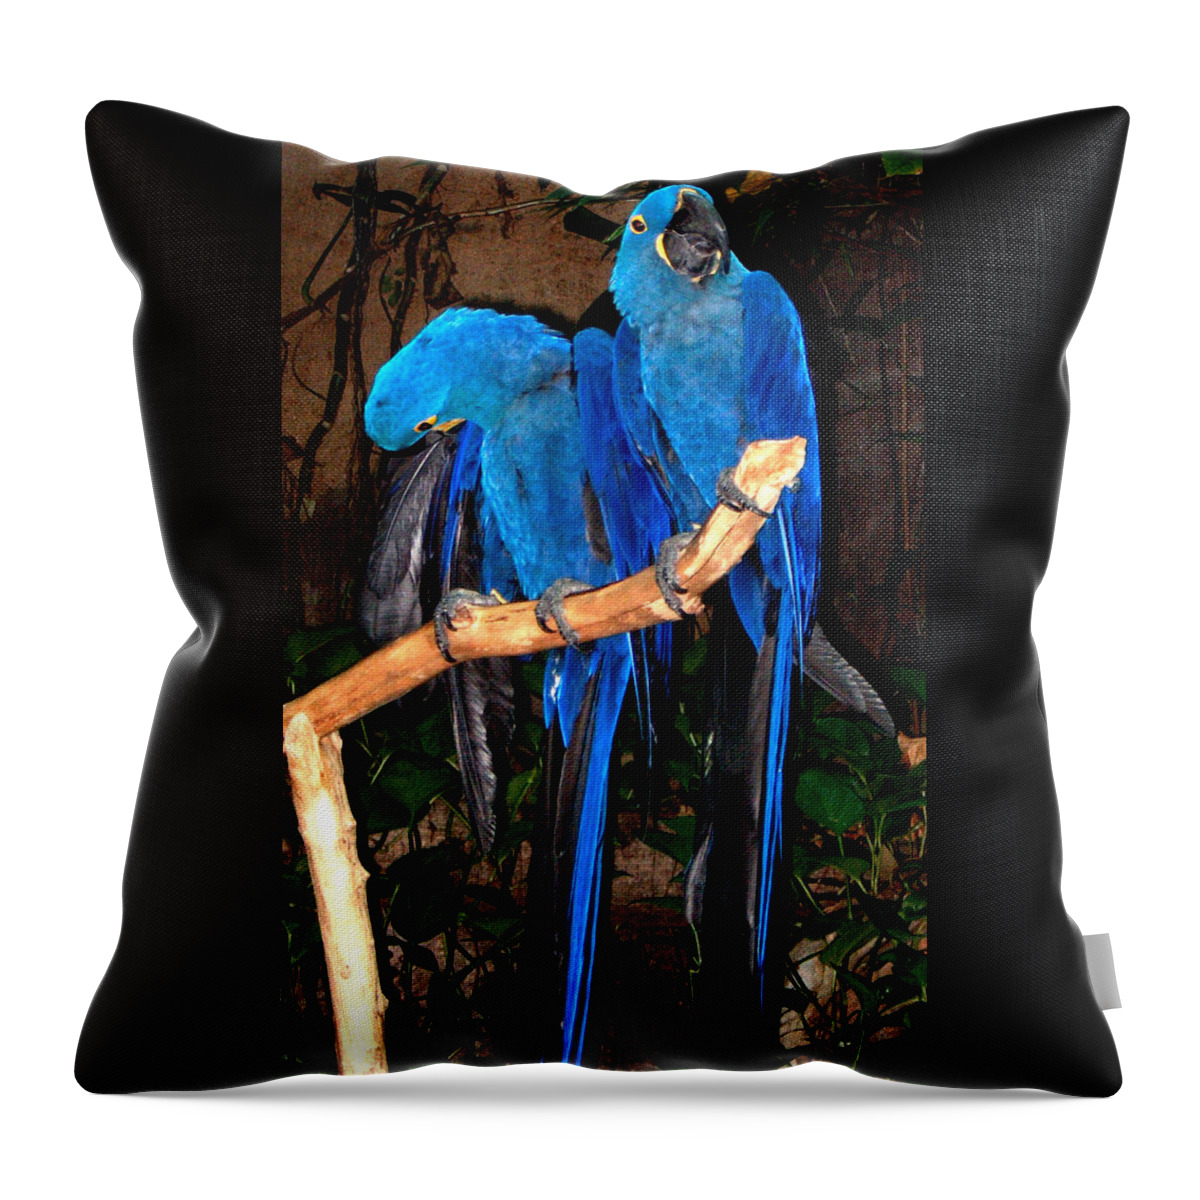 Blue Throw Pillow featuring the photograph Blue Velvet by Bertie Edwards